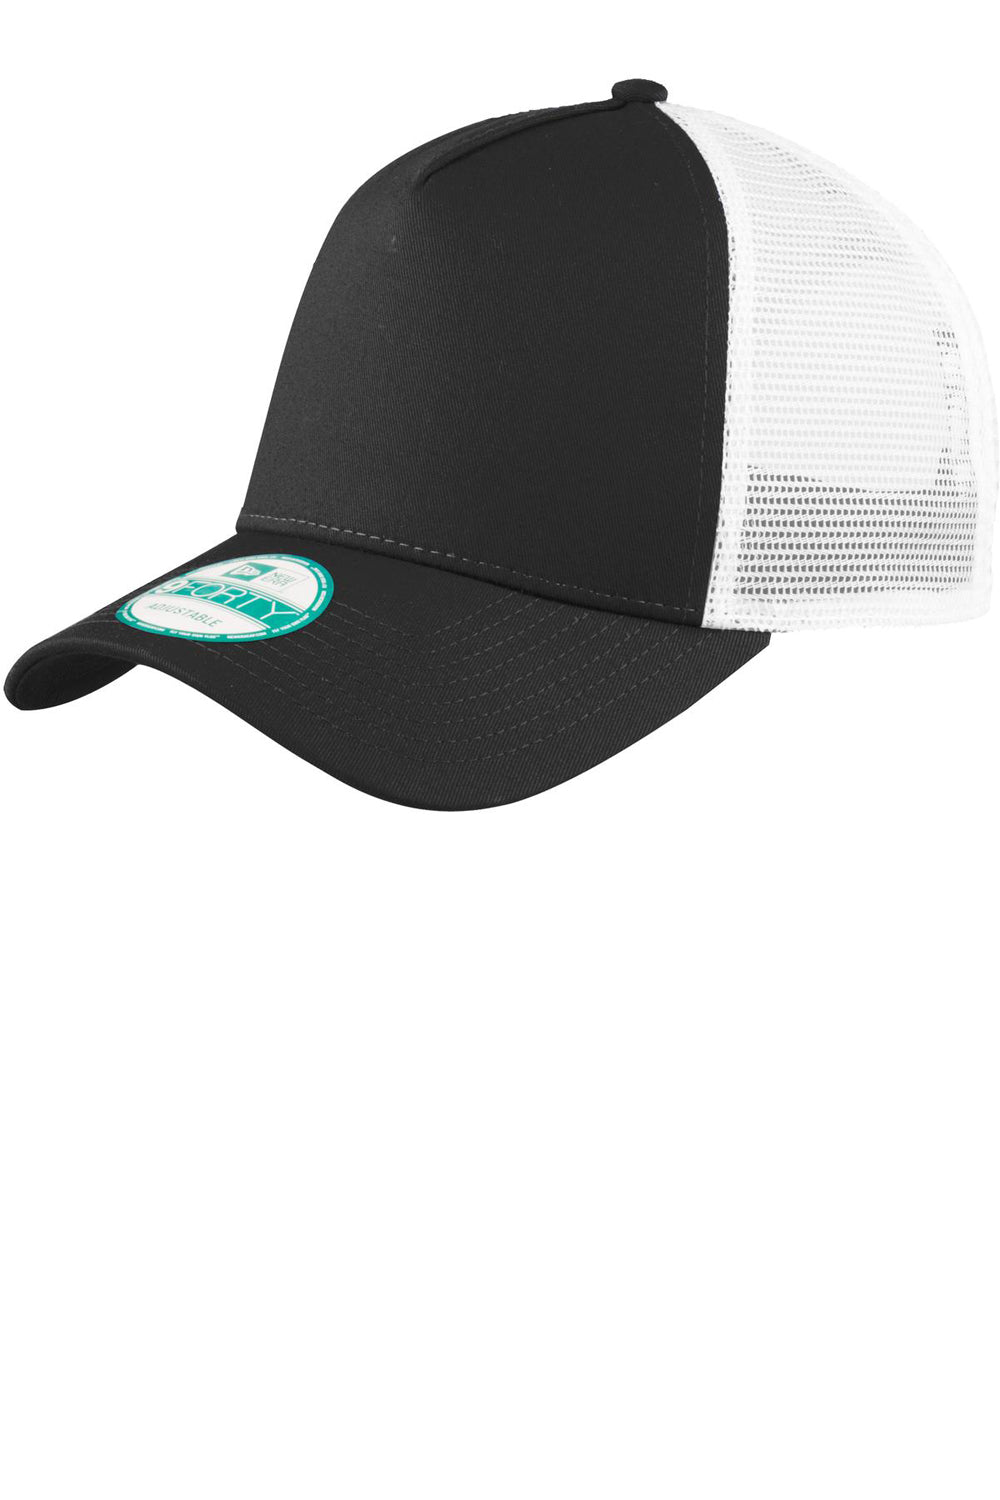 New Era NE205 Mens Adjustable Trucker Hat Black/White Front